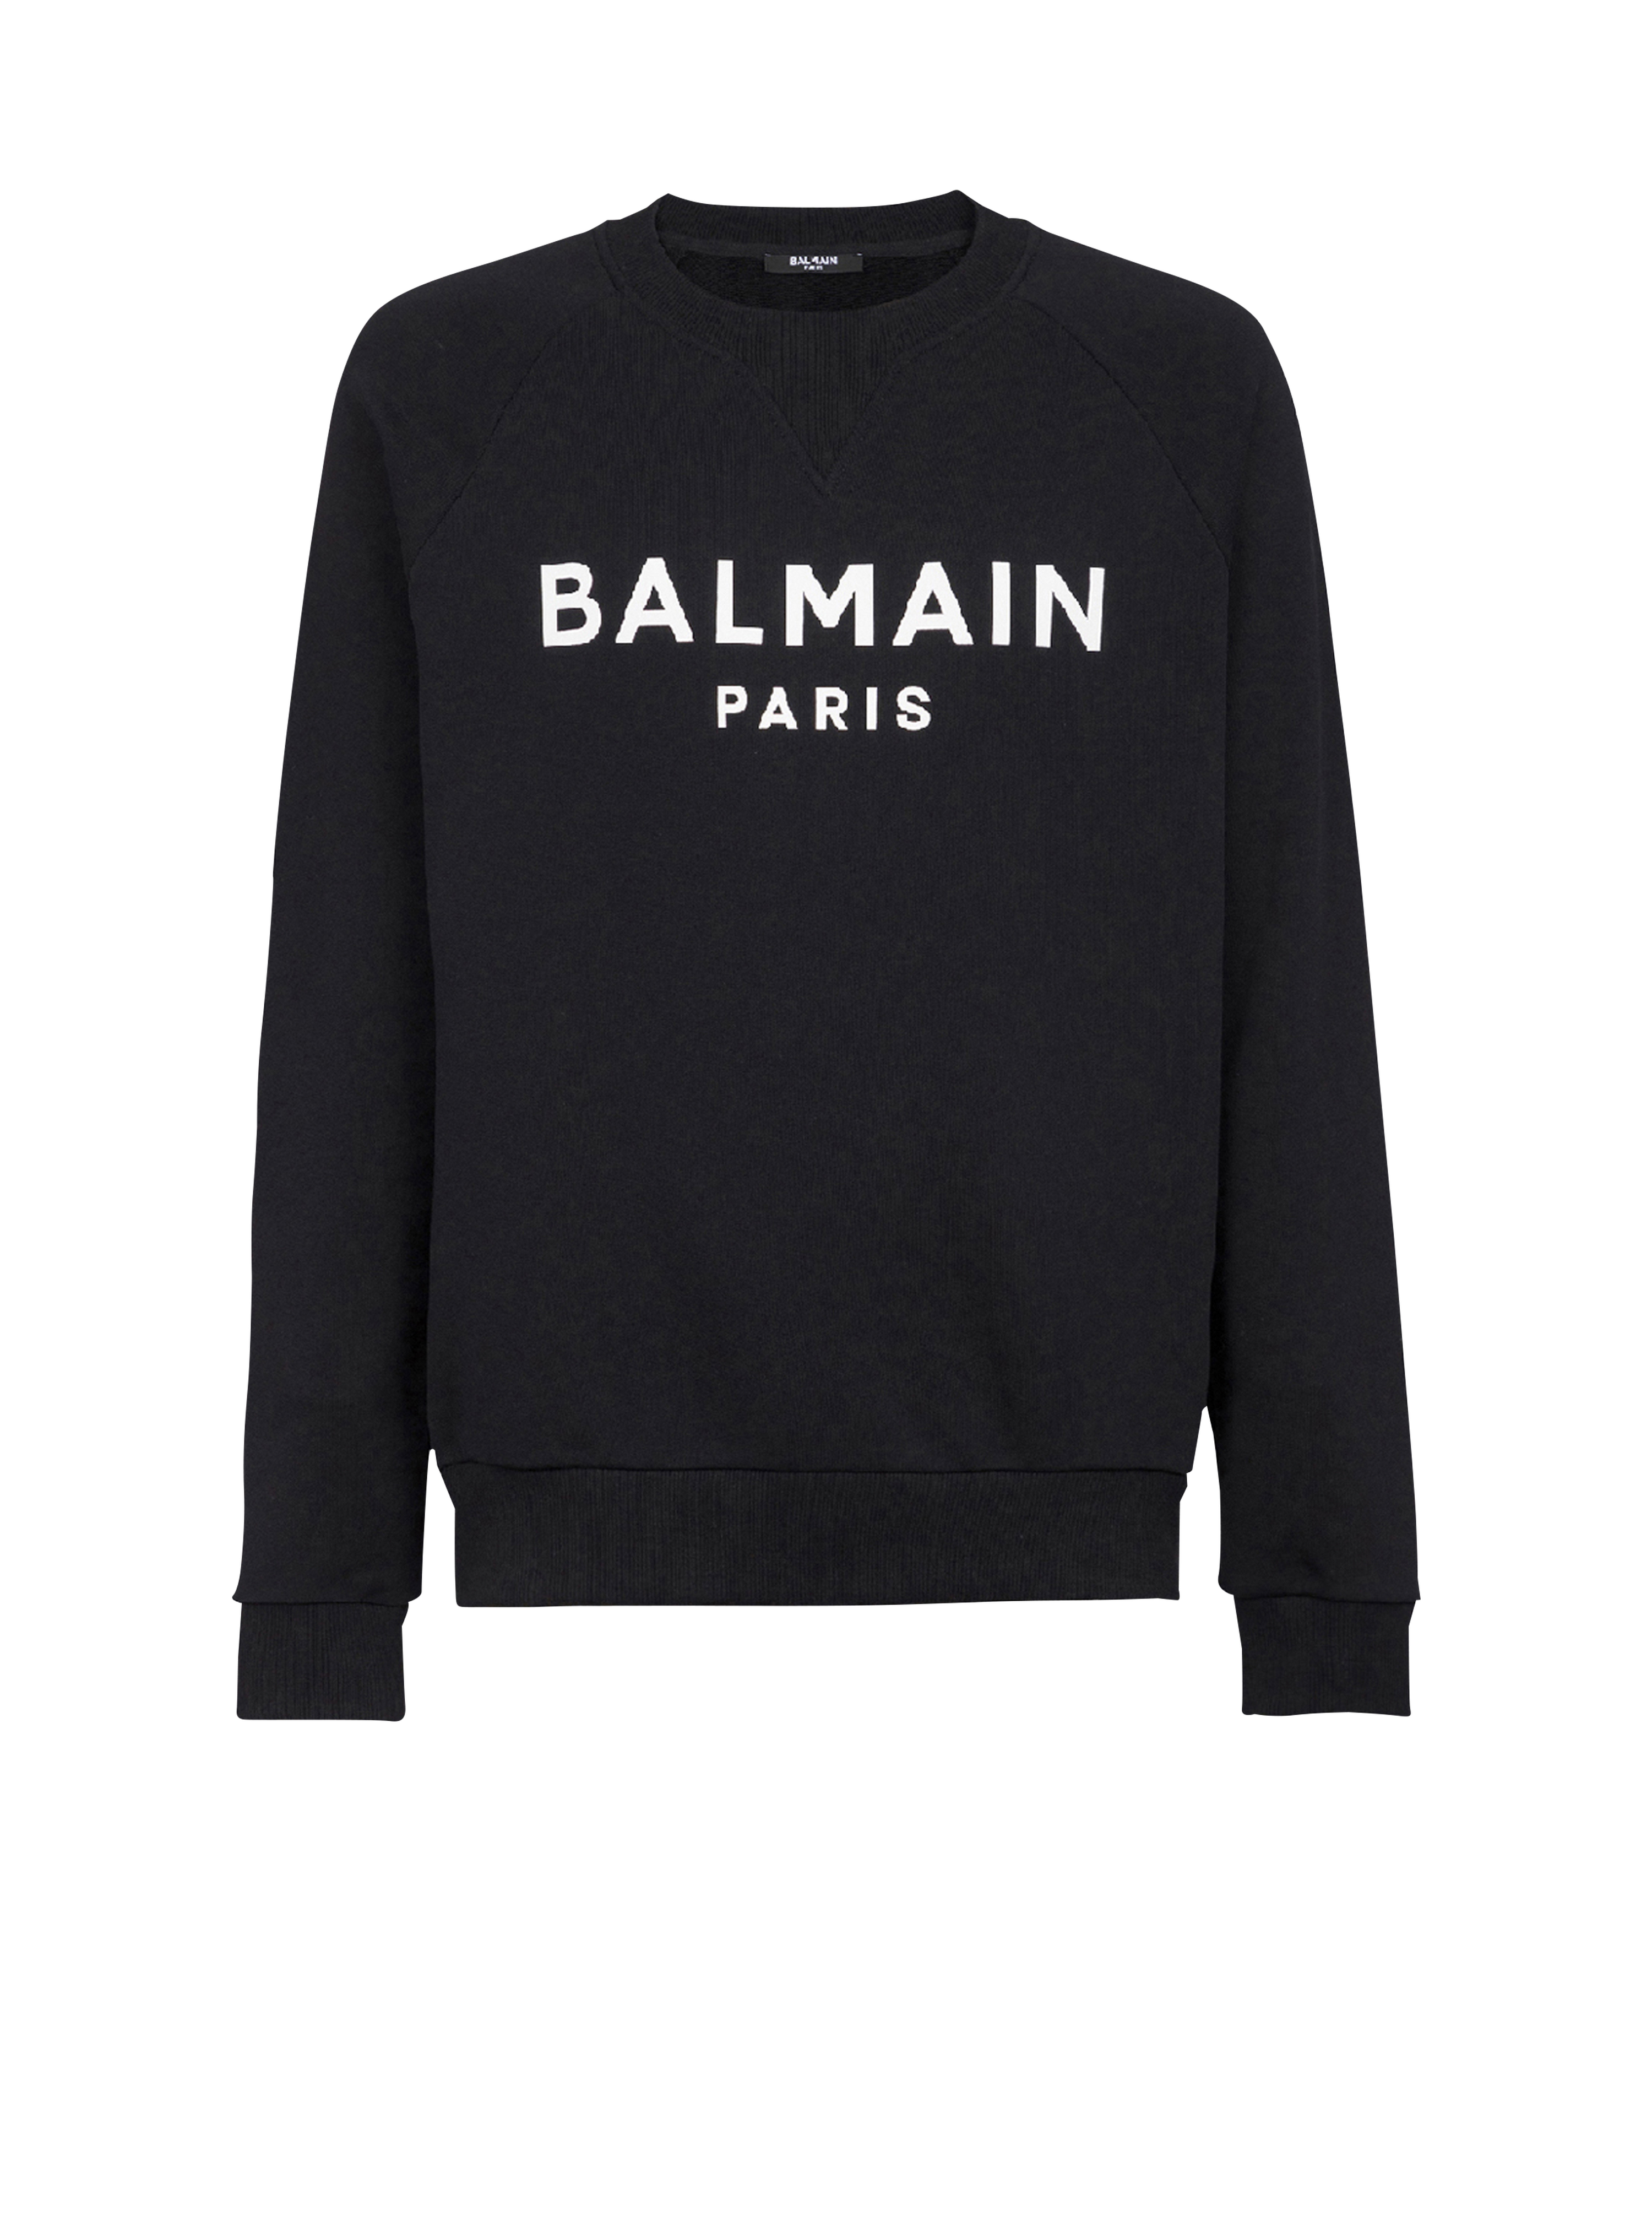 Eco-designed cotton sweatshirt with Balmain Paris logo print, black